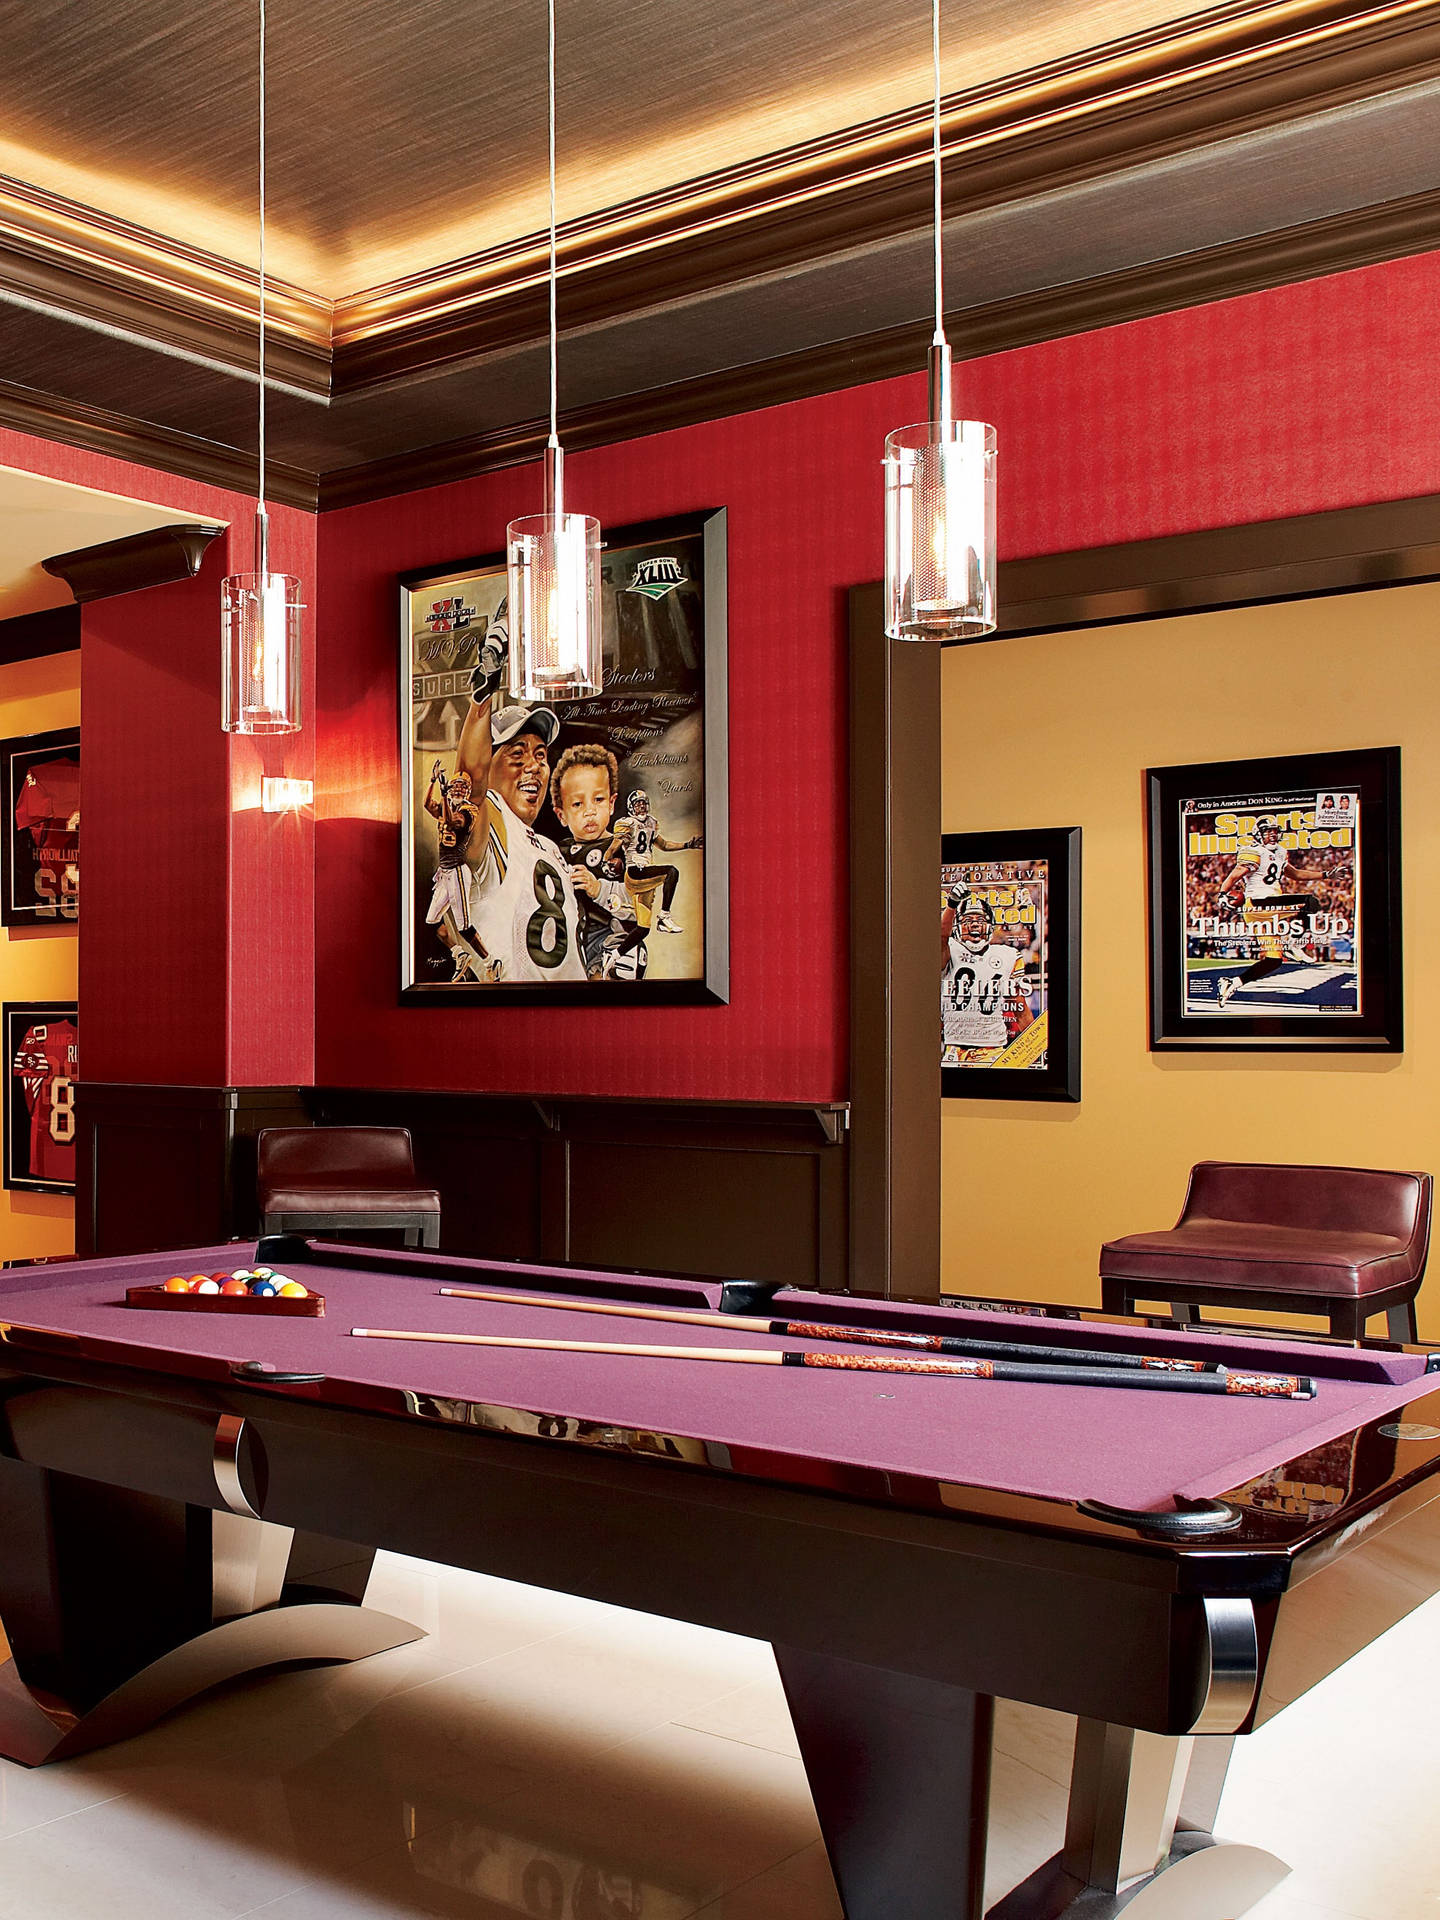 Billiards Purple Pool Table In Red Room Wallpaper